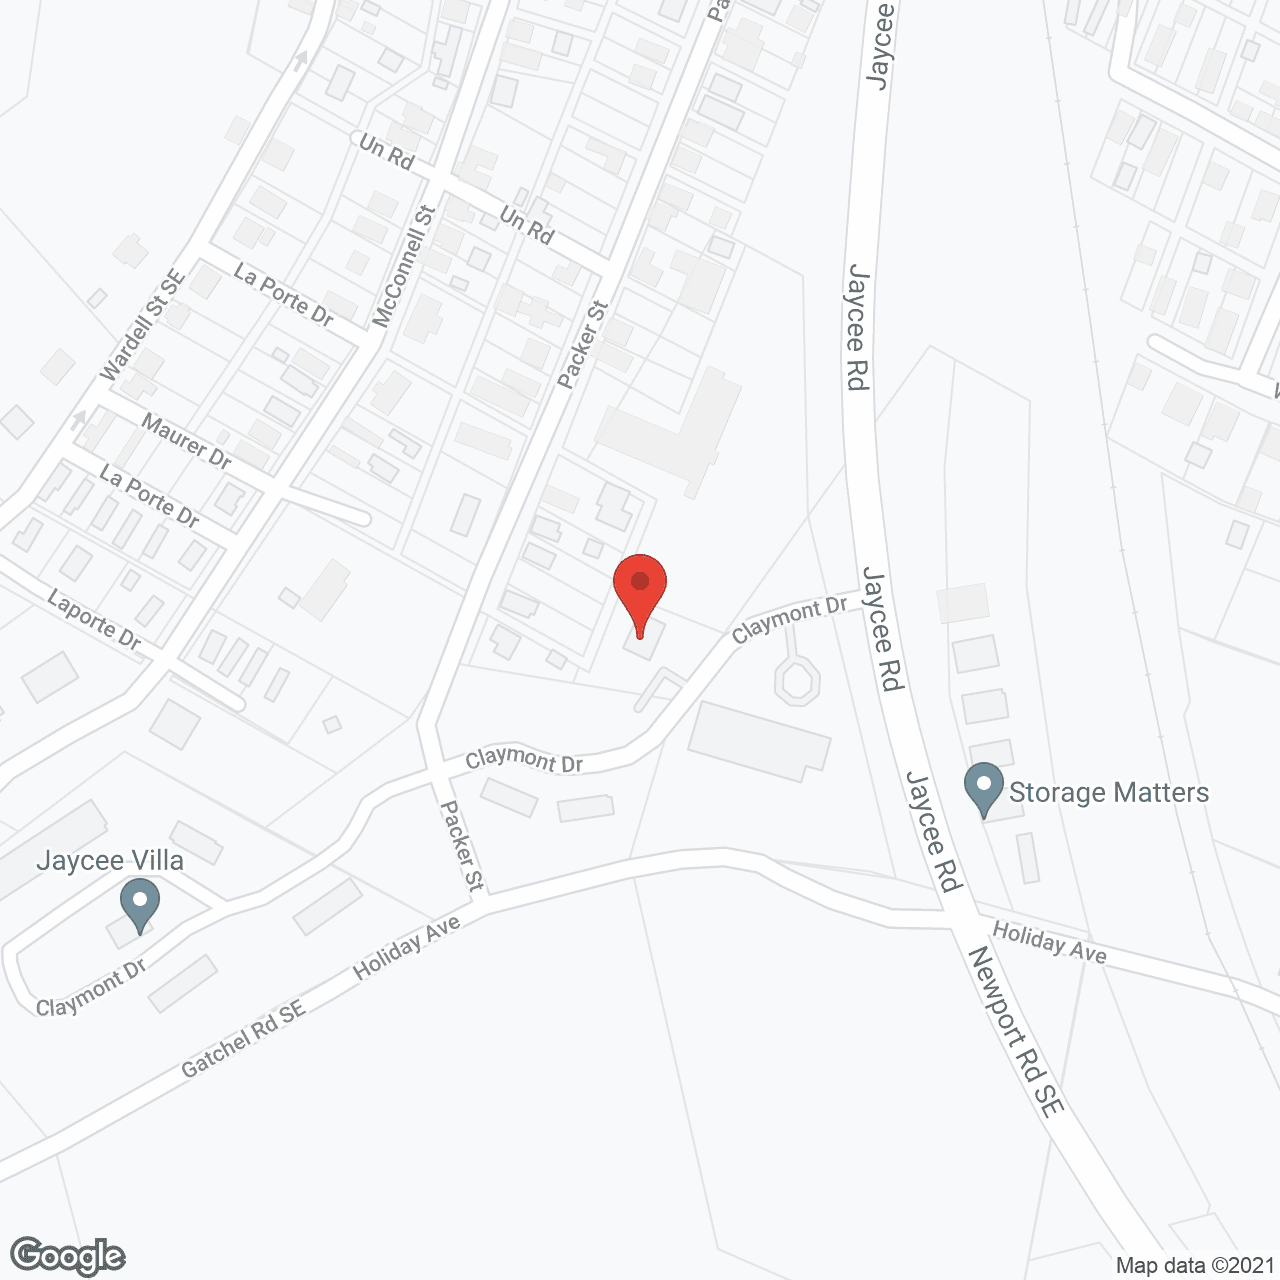 Jaycee Villa in google map